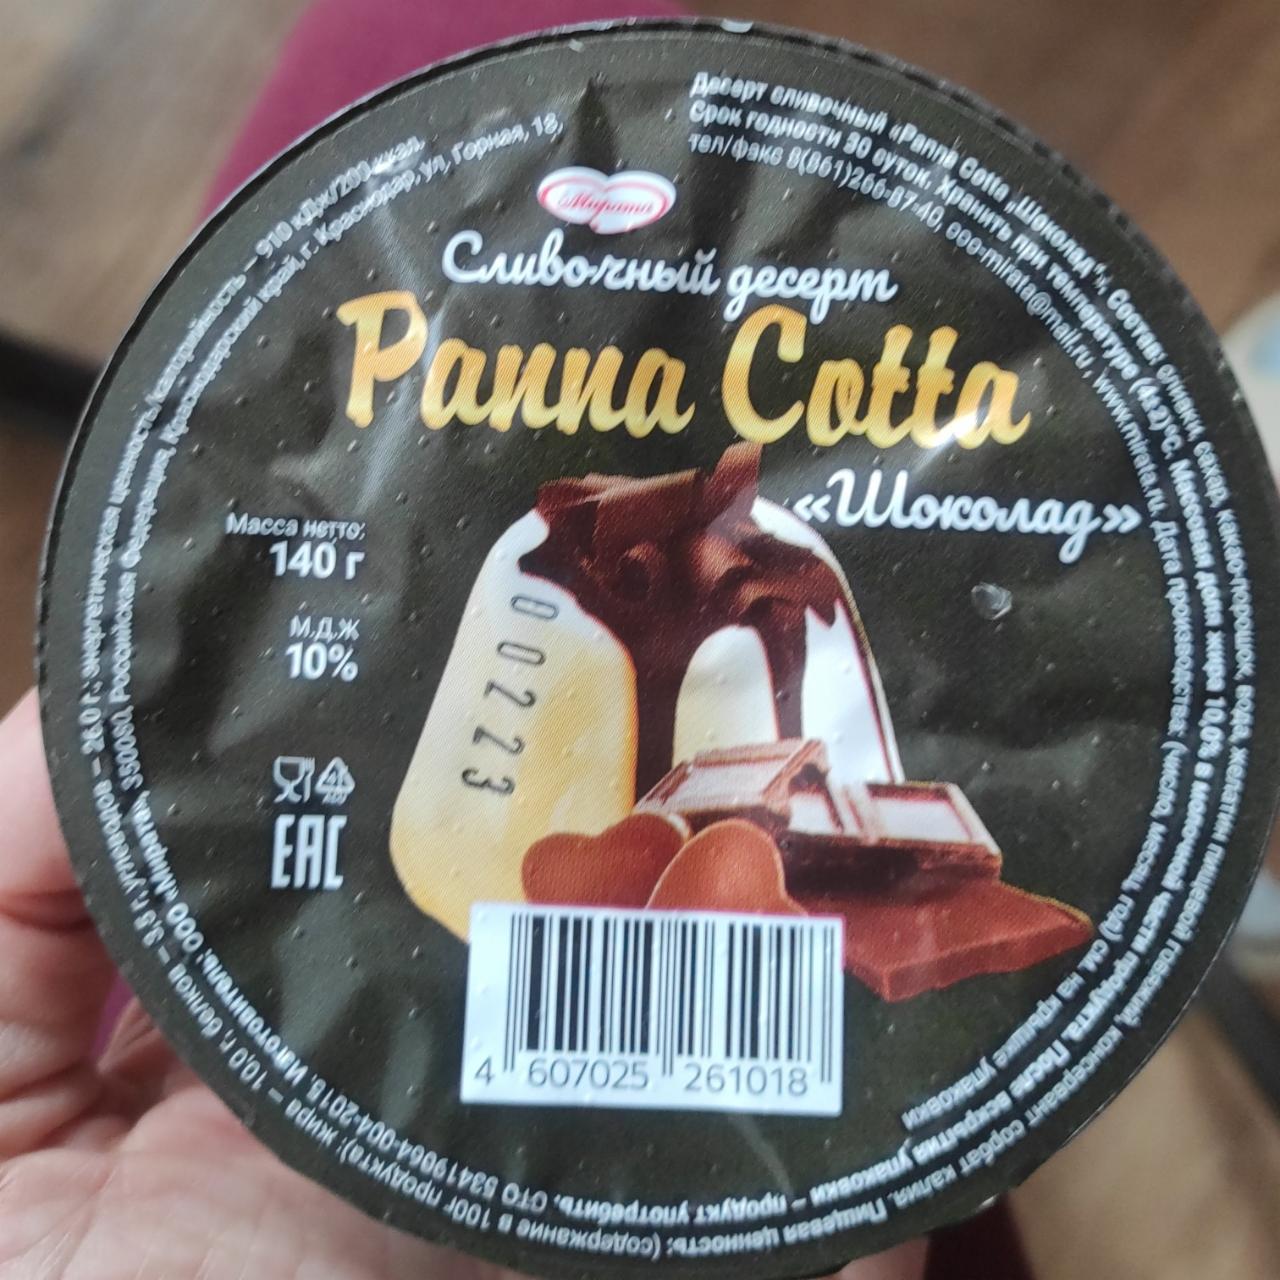 Фото - Сливочный десерт панна котта Panna Cotta Мирата